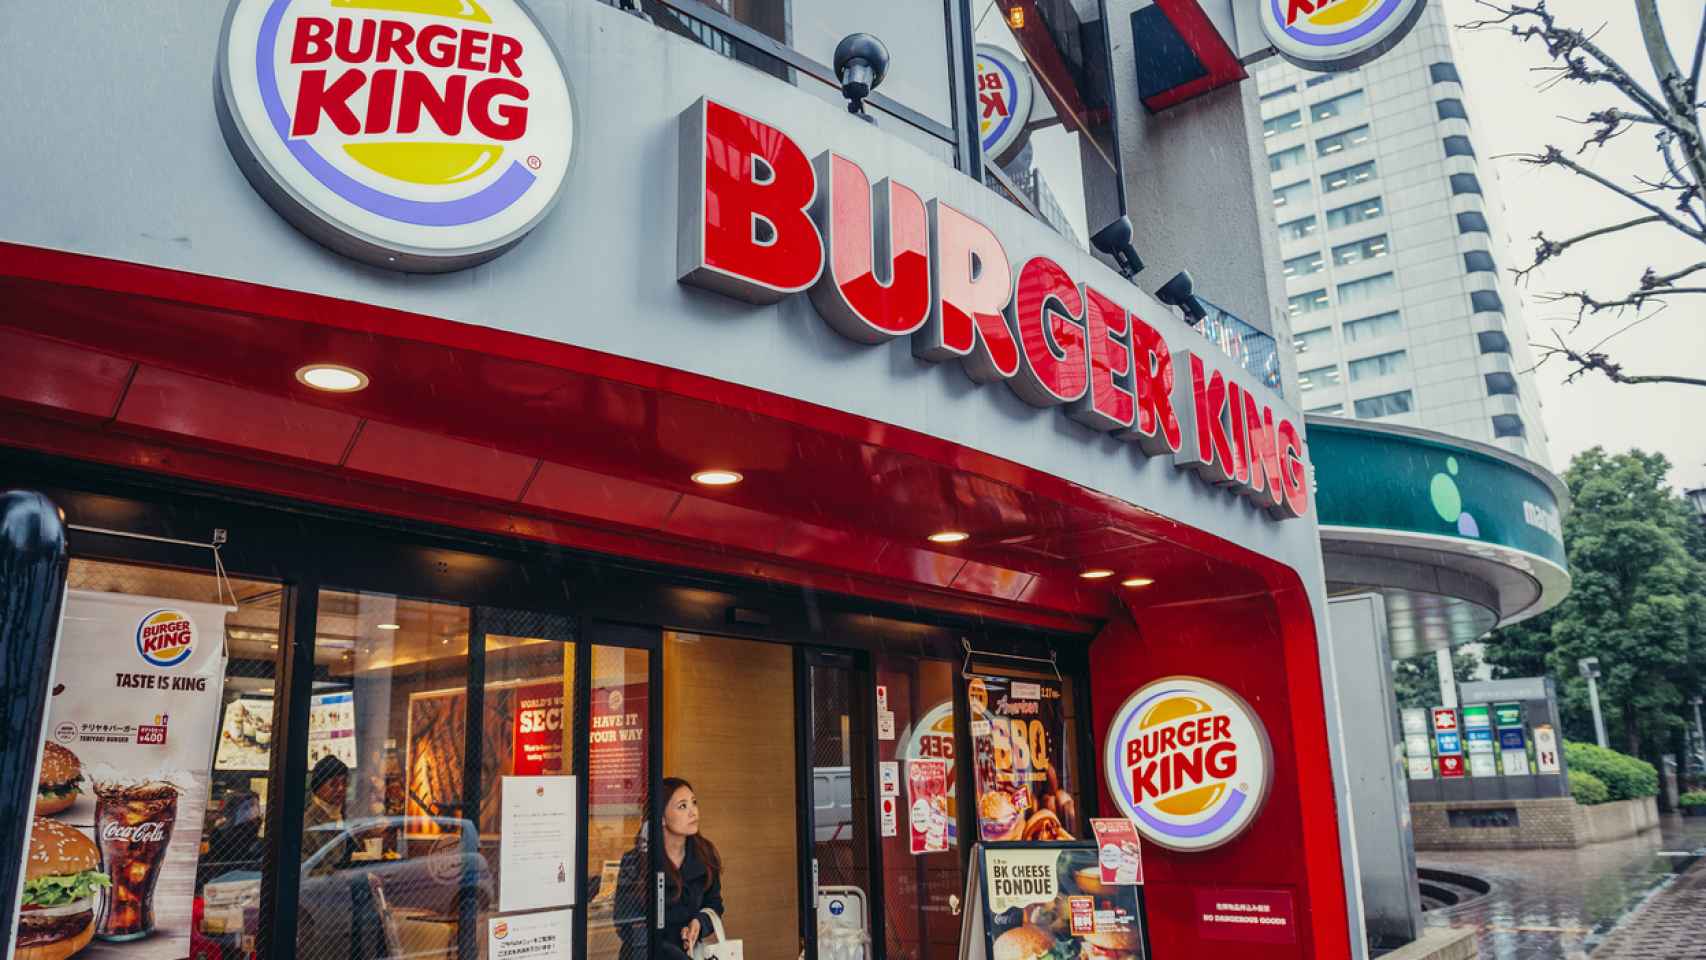 Burger King Rusia recompensa a quien sea embarazada por una estrella del Mundial